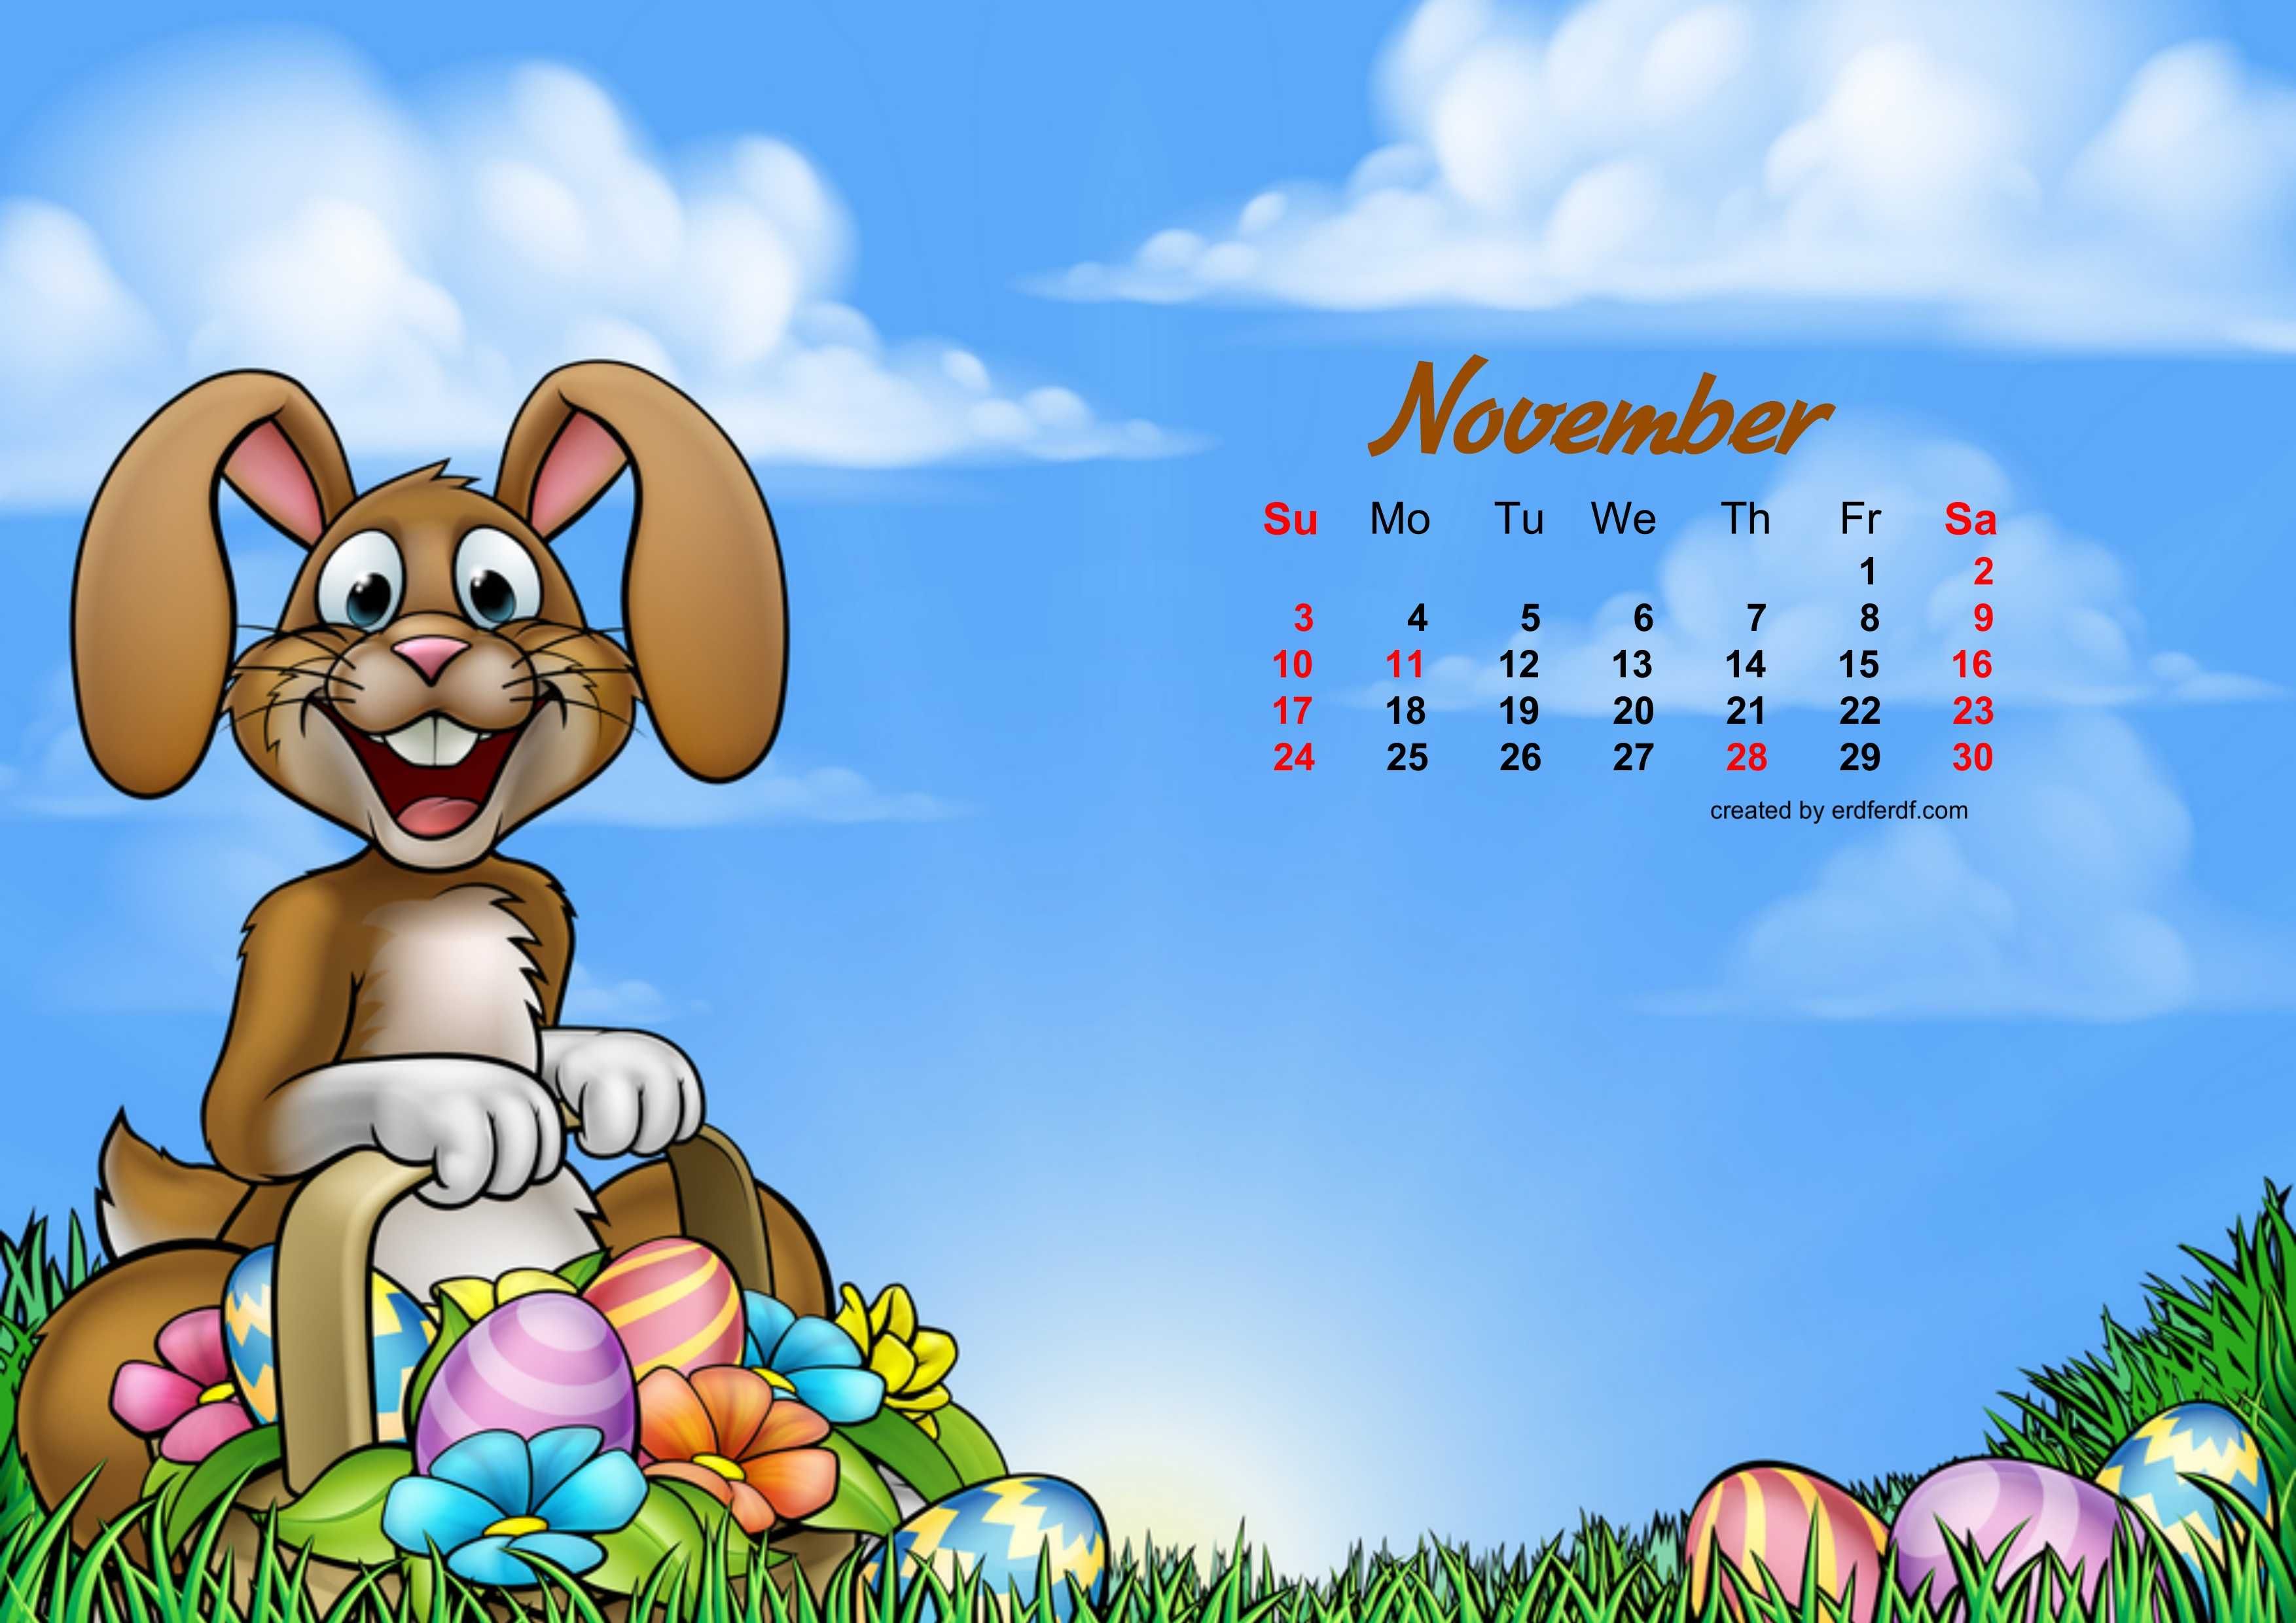 Easter Bunny December 2019 Desktop Calendar Wallpaper Blue.